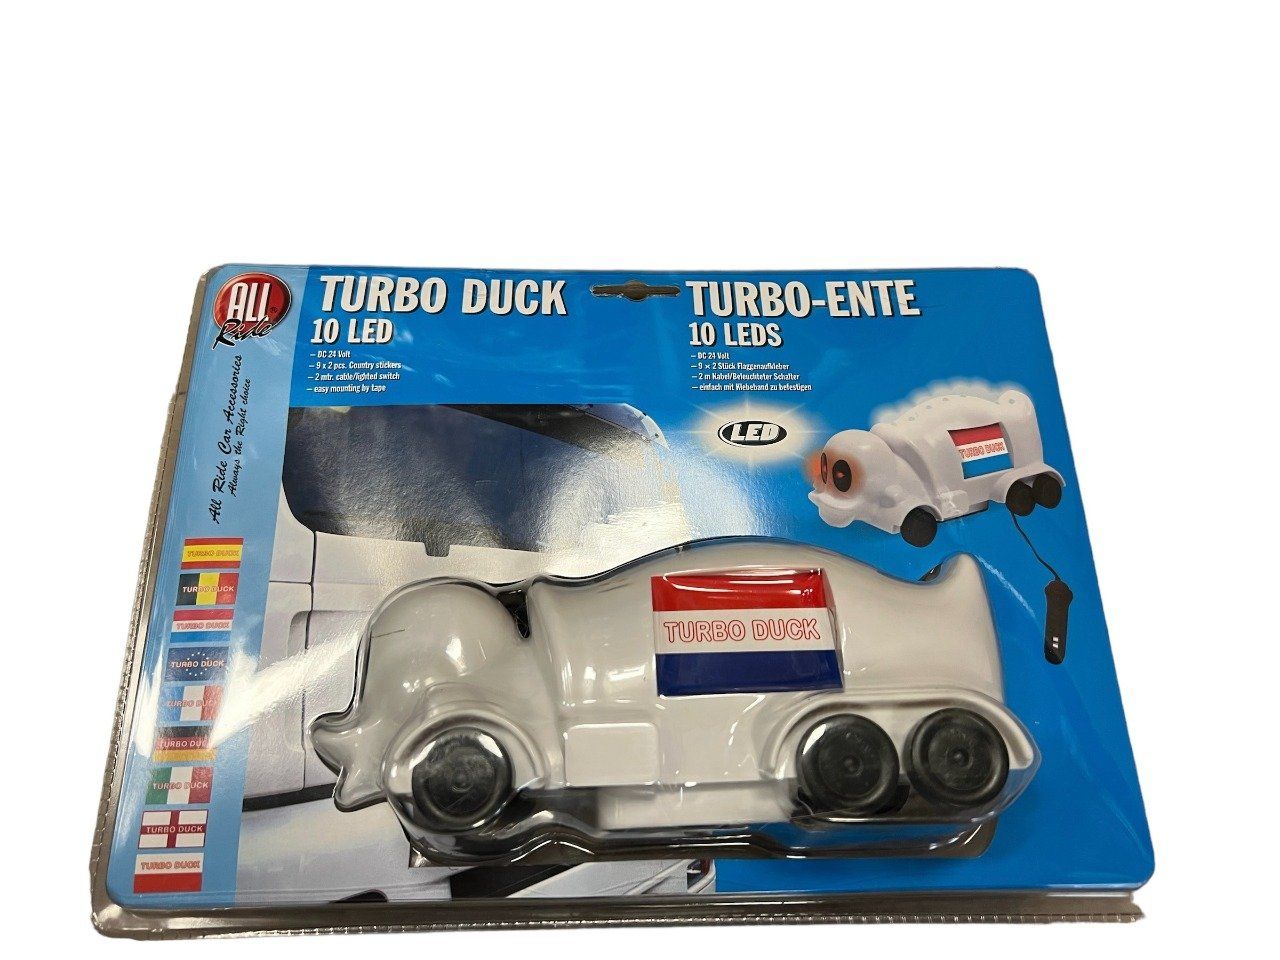 Duck turbo 10 led - Trucketvanshop